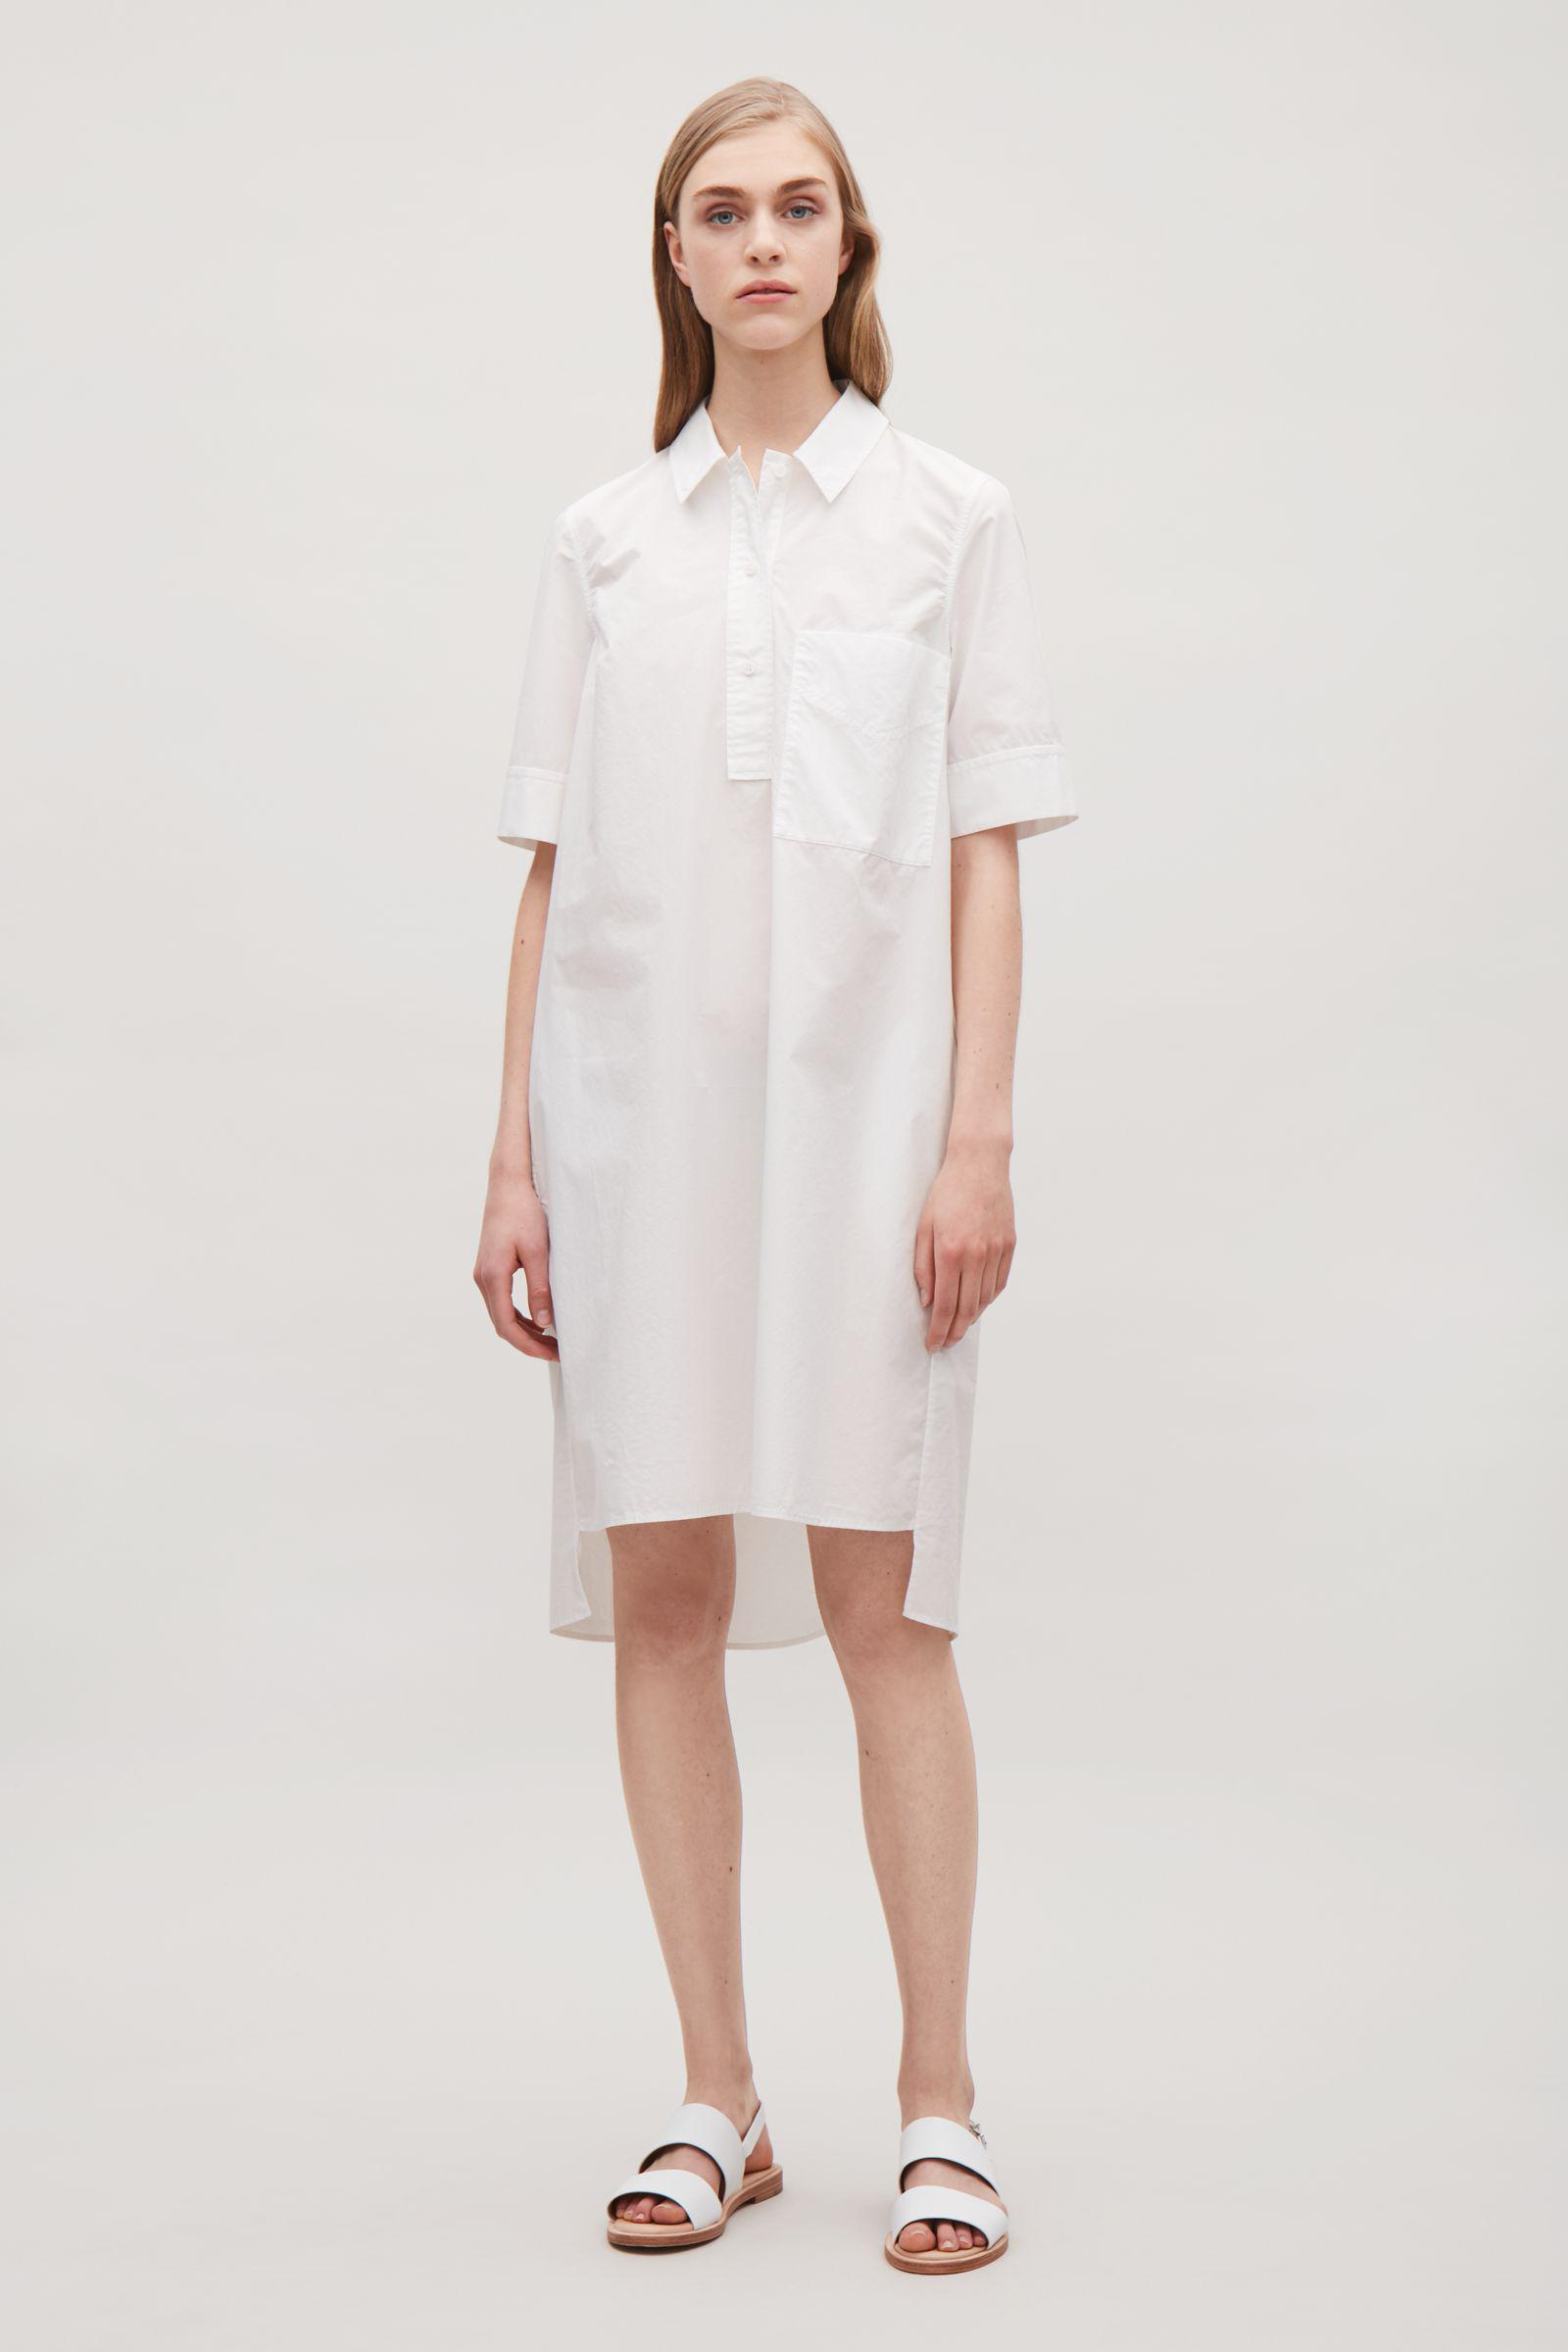 COS Voluminous Poplin Shirt Dress in White | Lyst